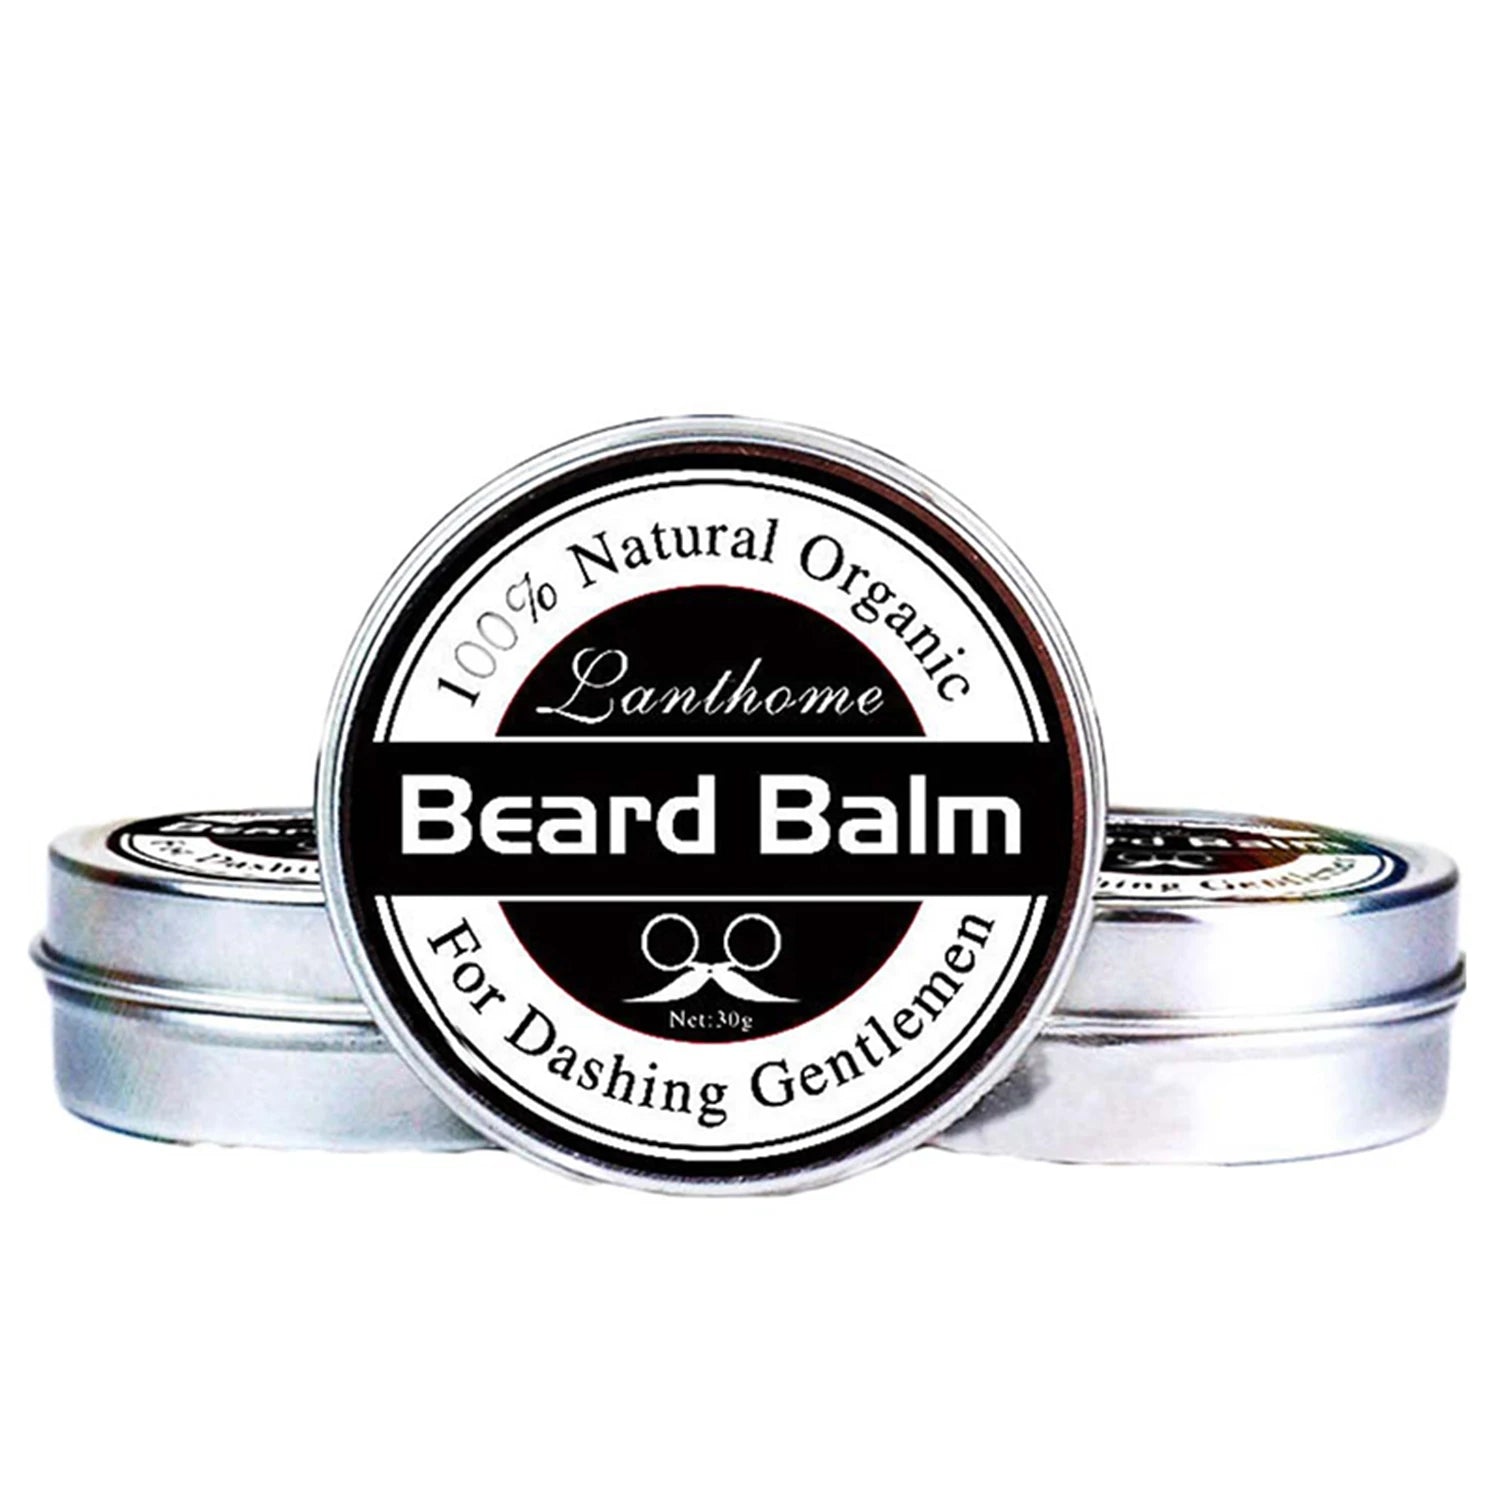 Lanthome Beard Balm Wax For Men's Hair